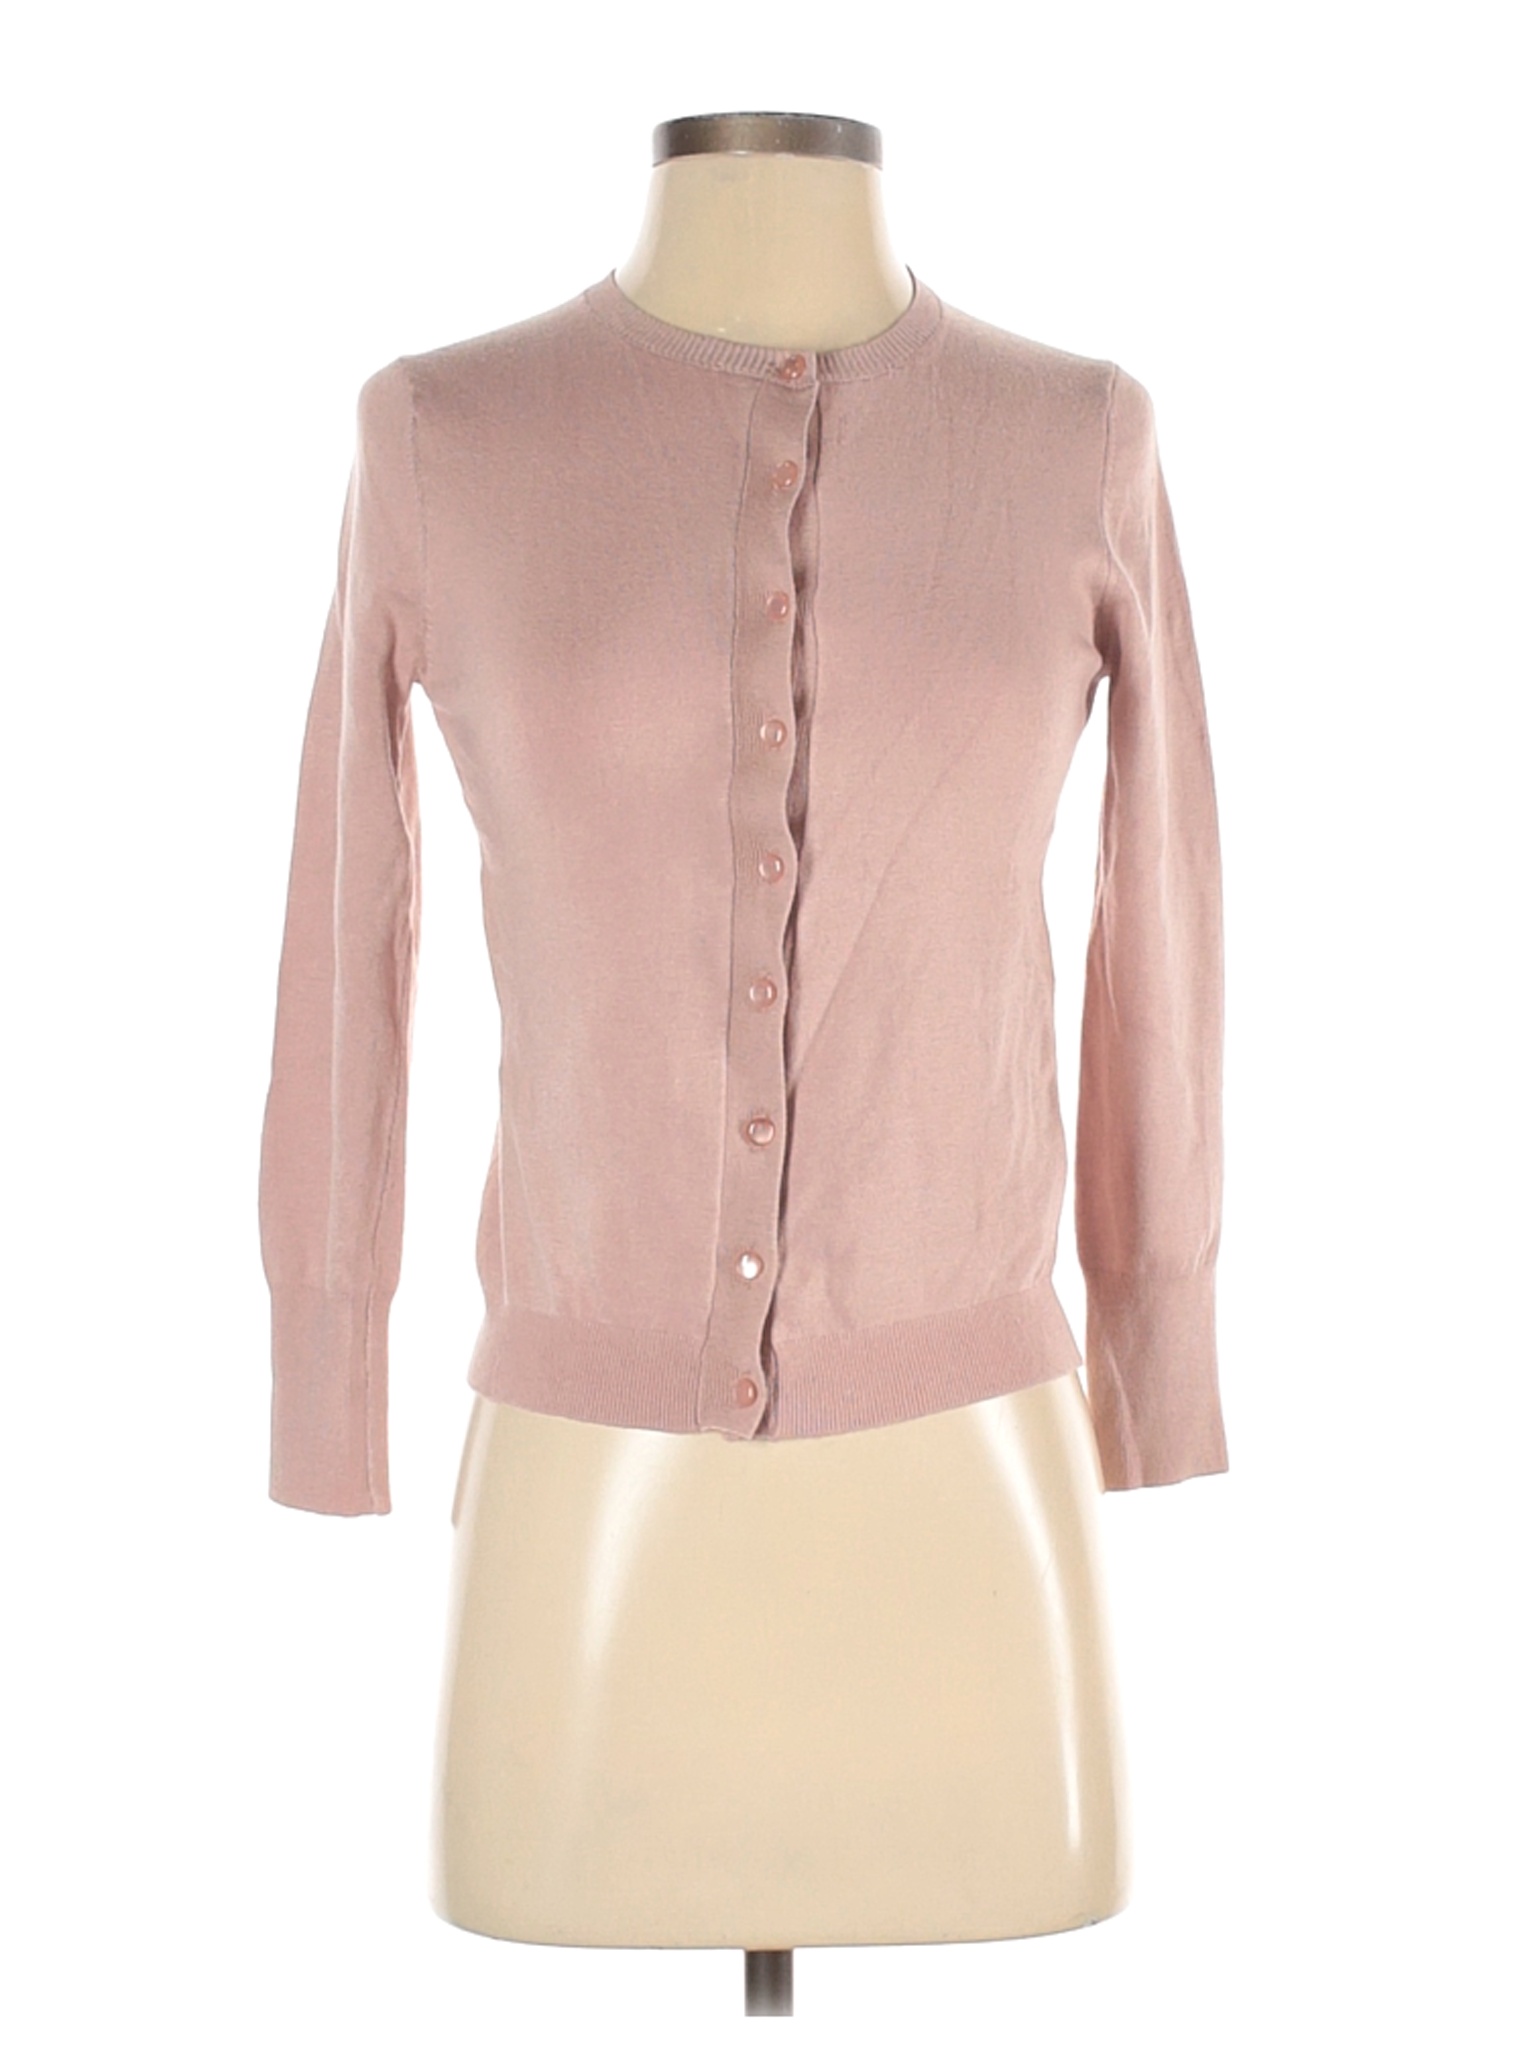 NWT Philosophy Republic Clothing Women Pink Cardigan XS Petites | eBay